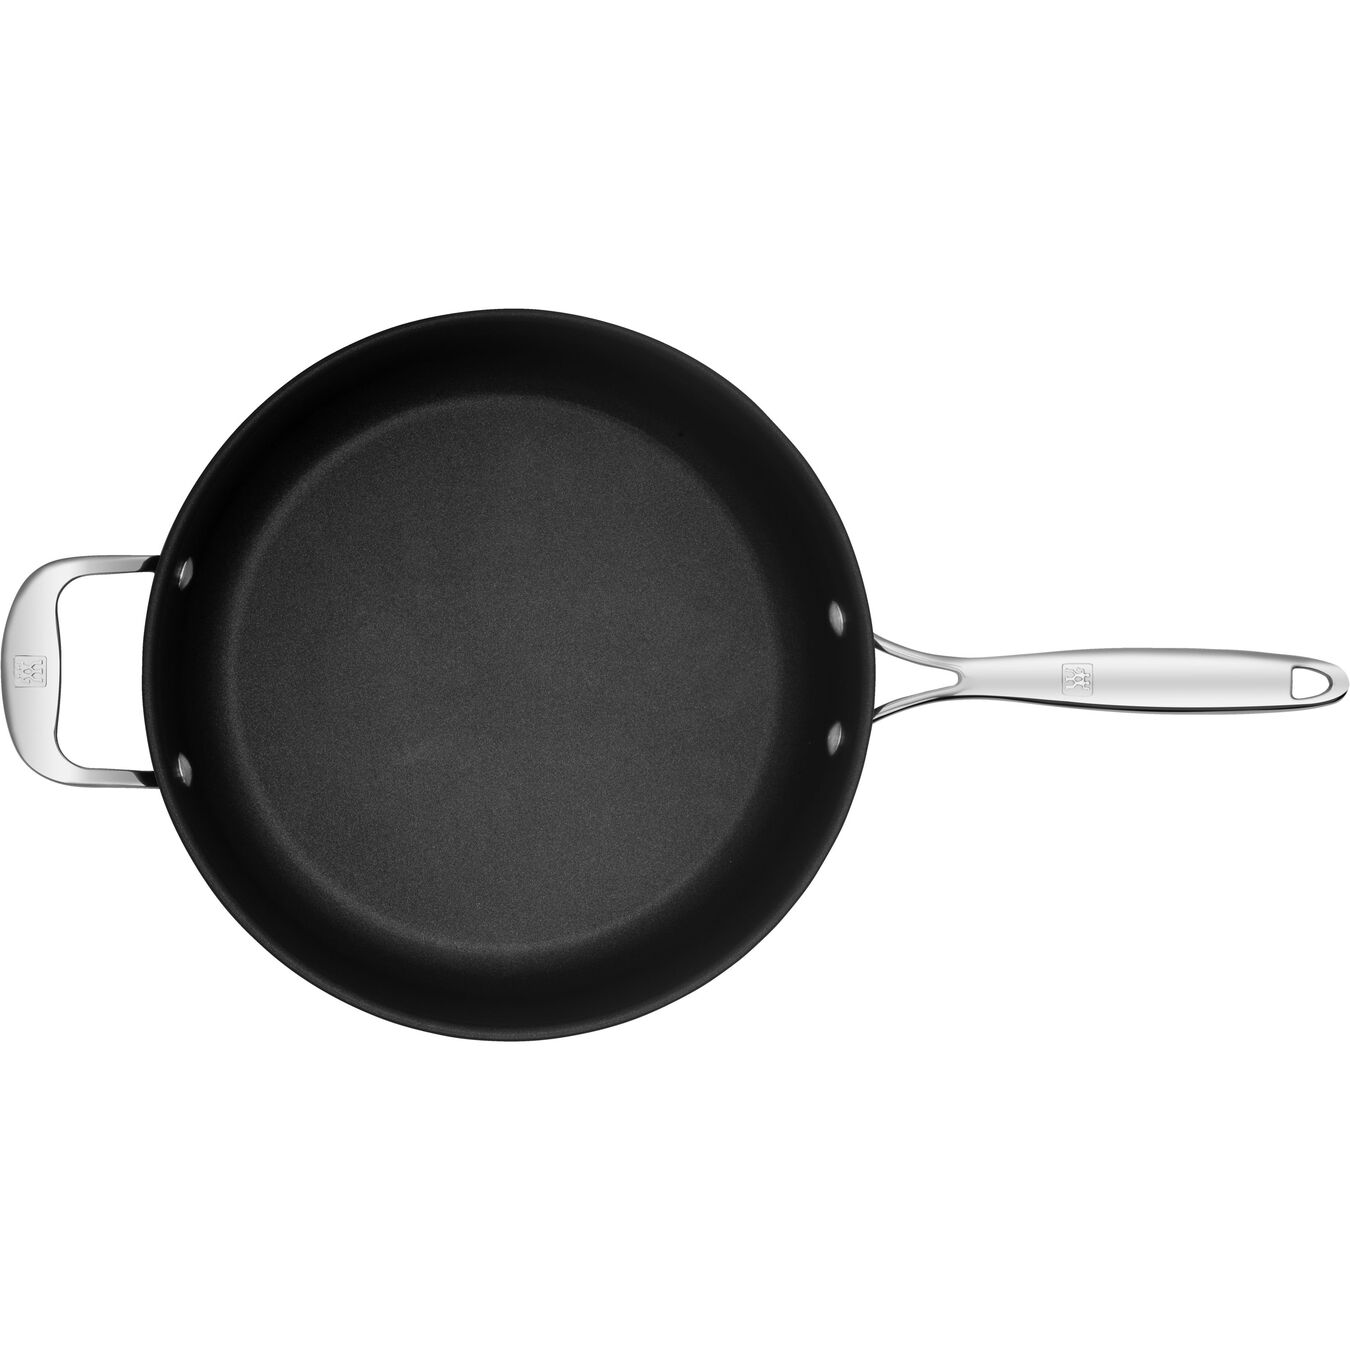 28 cm Aluminium Frying pan with lid black,,large 6